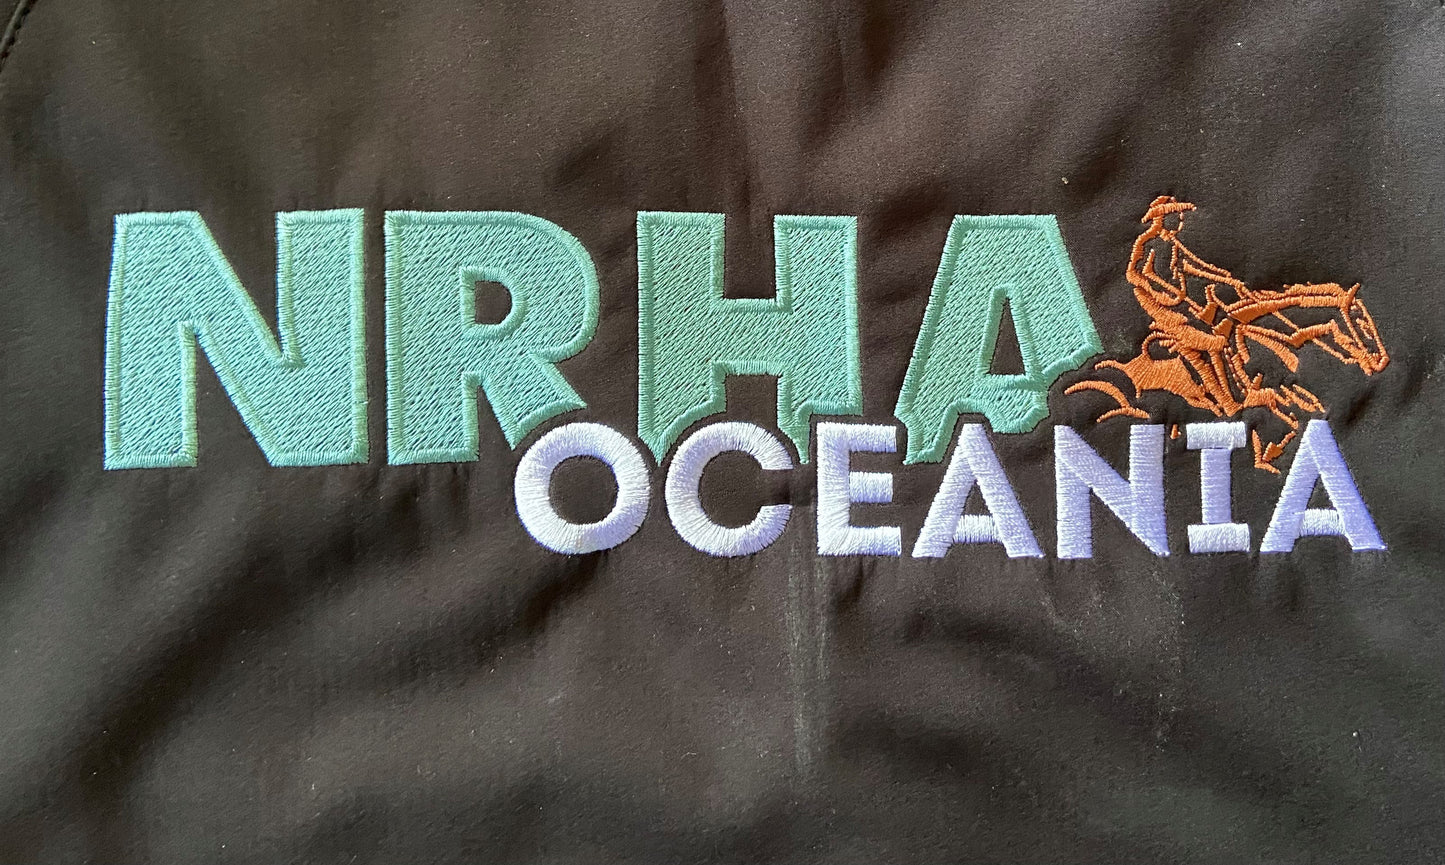 NRHA OC softshell jacket